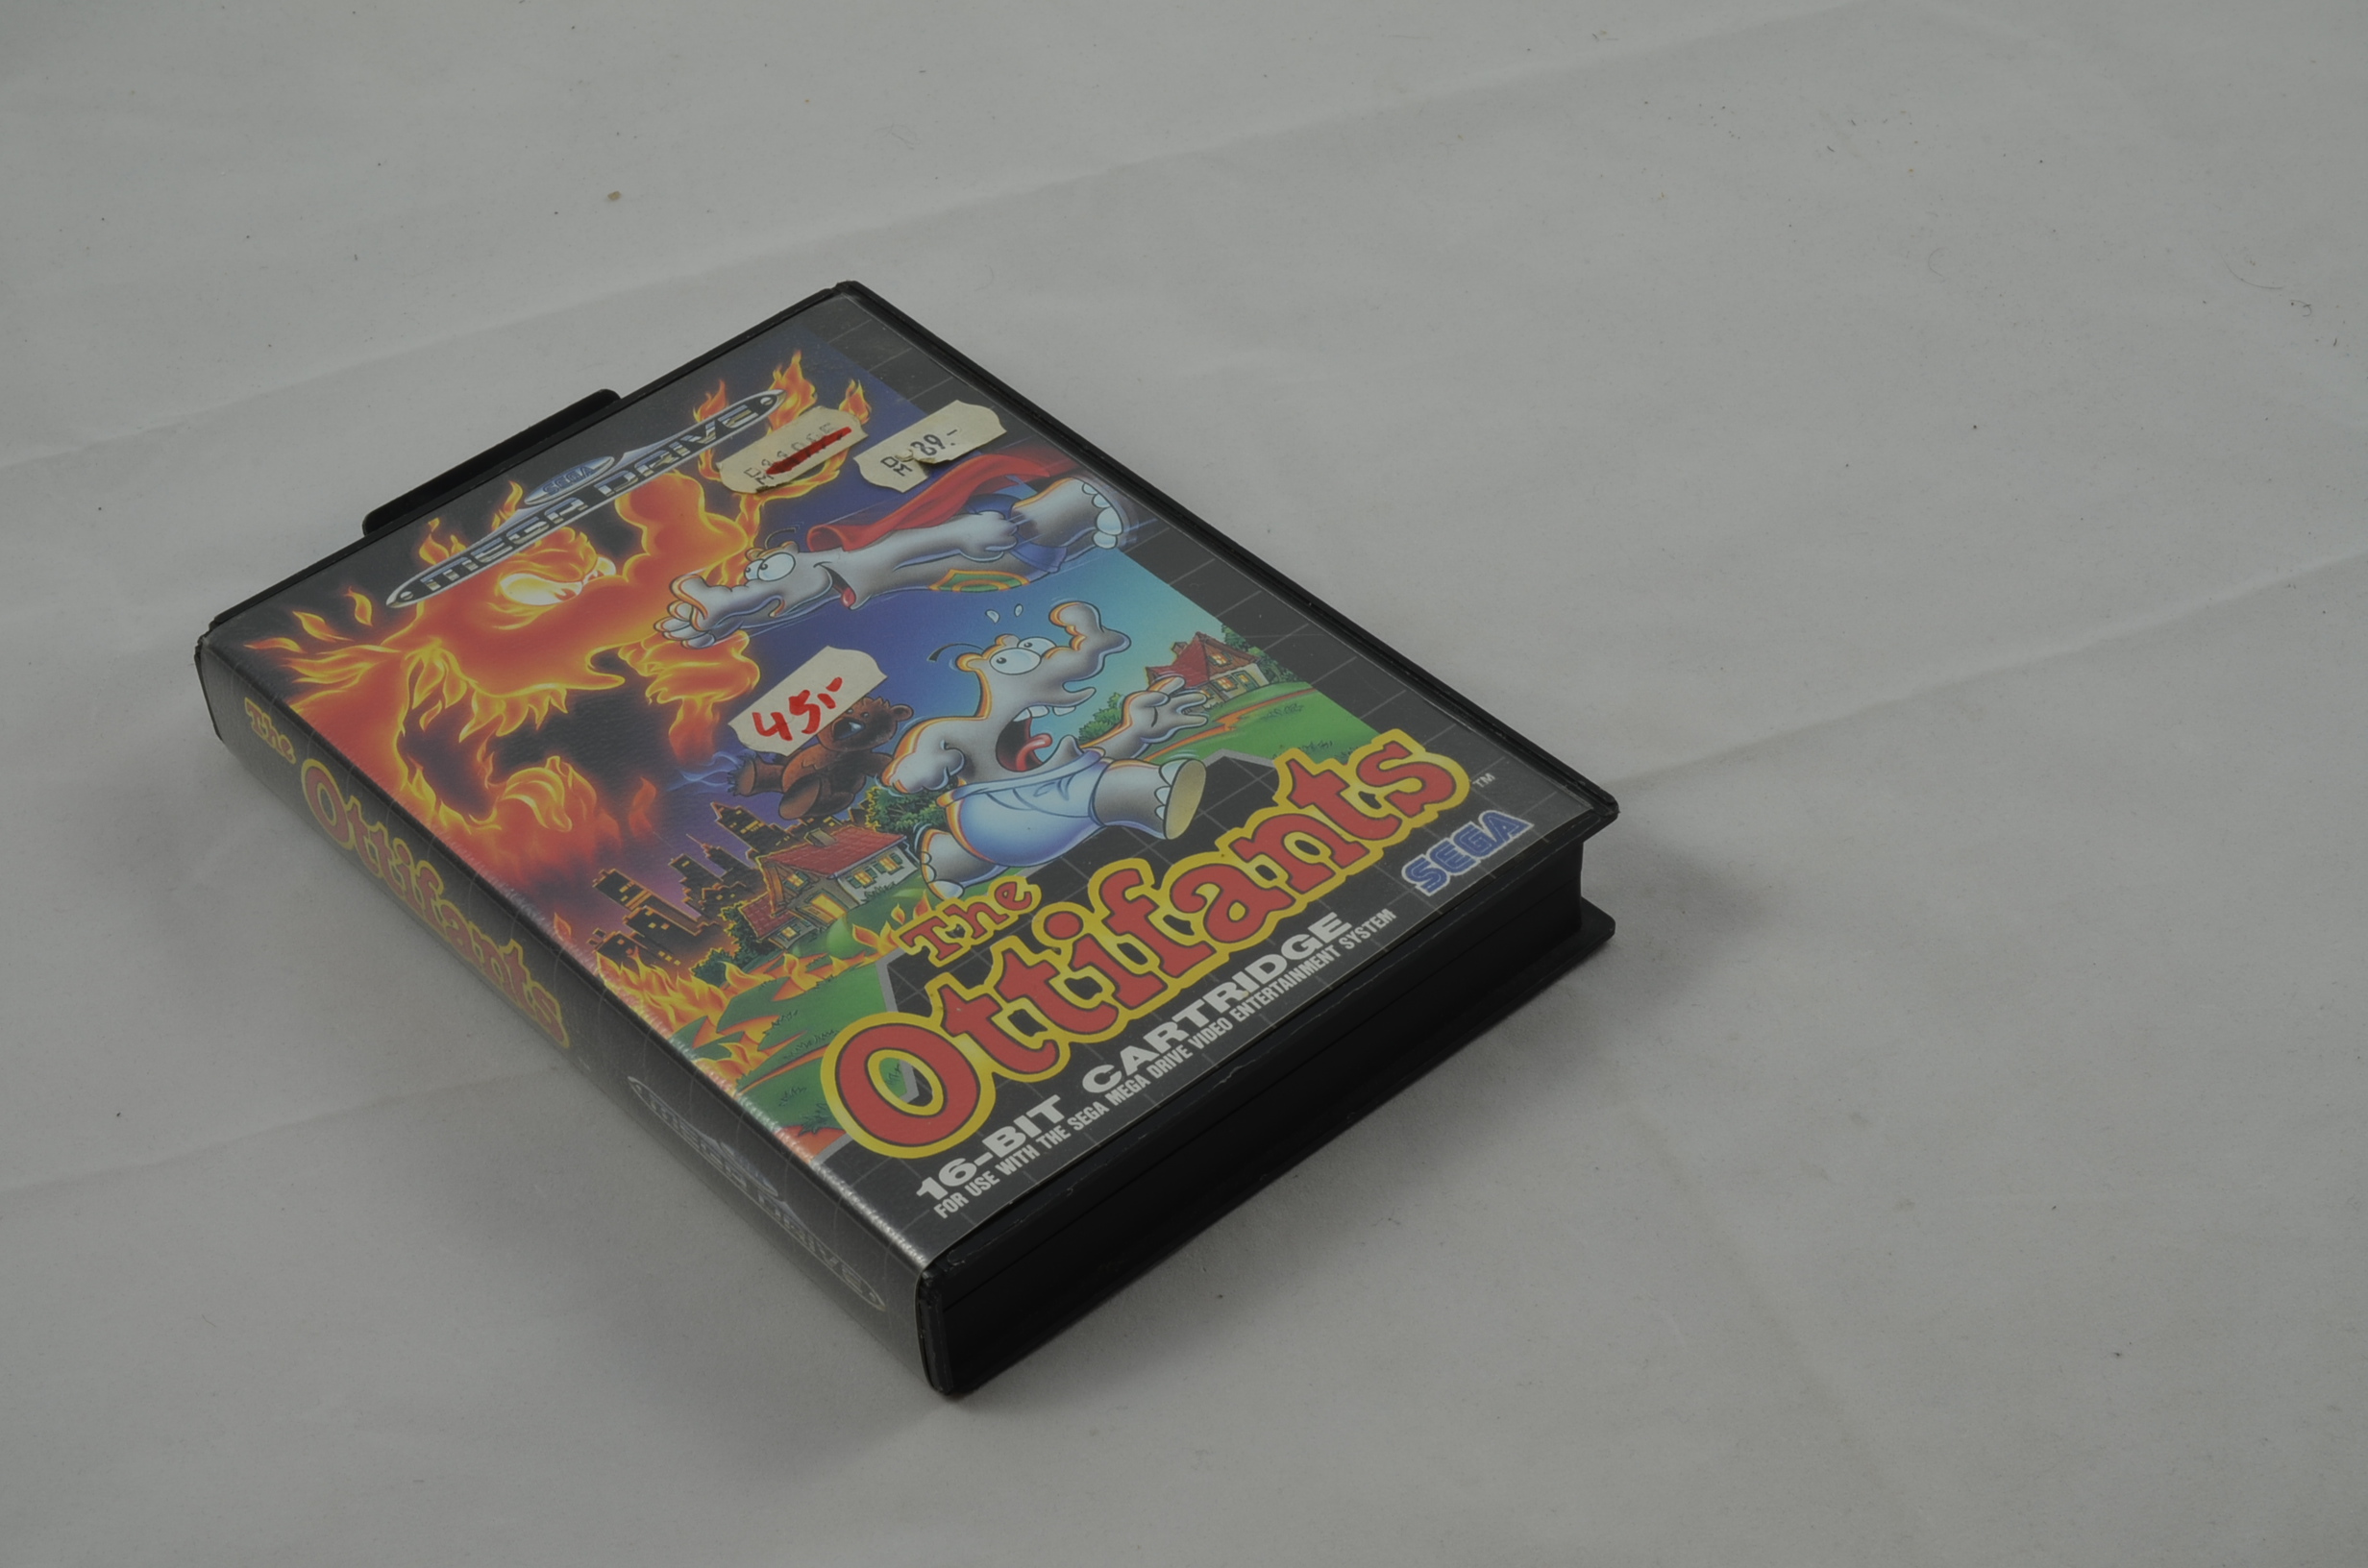 Produktbild von The Ottifants Sega Mega Drive Spiel CIB (sehr gut)